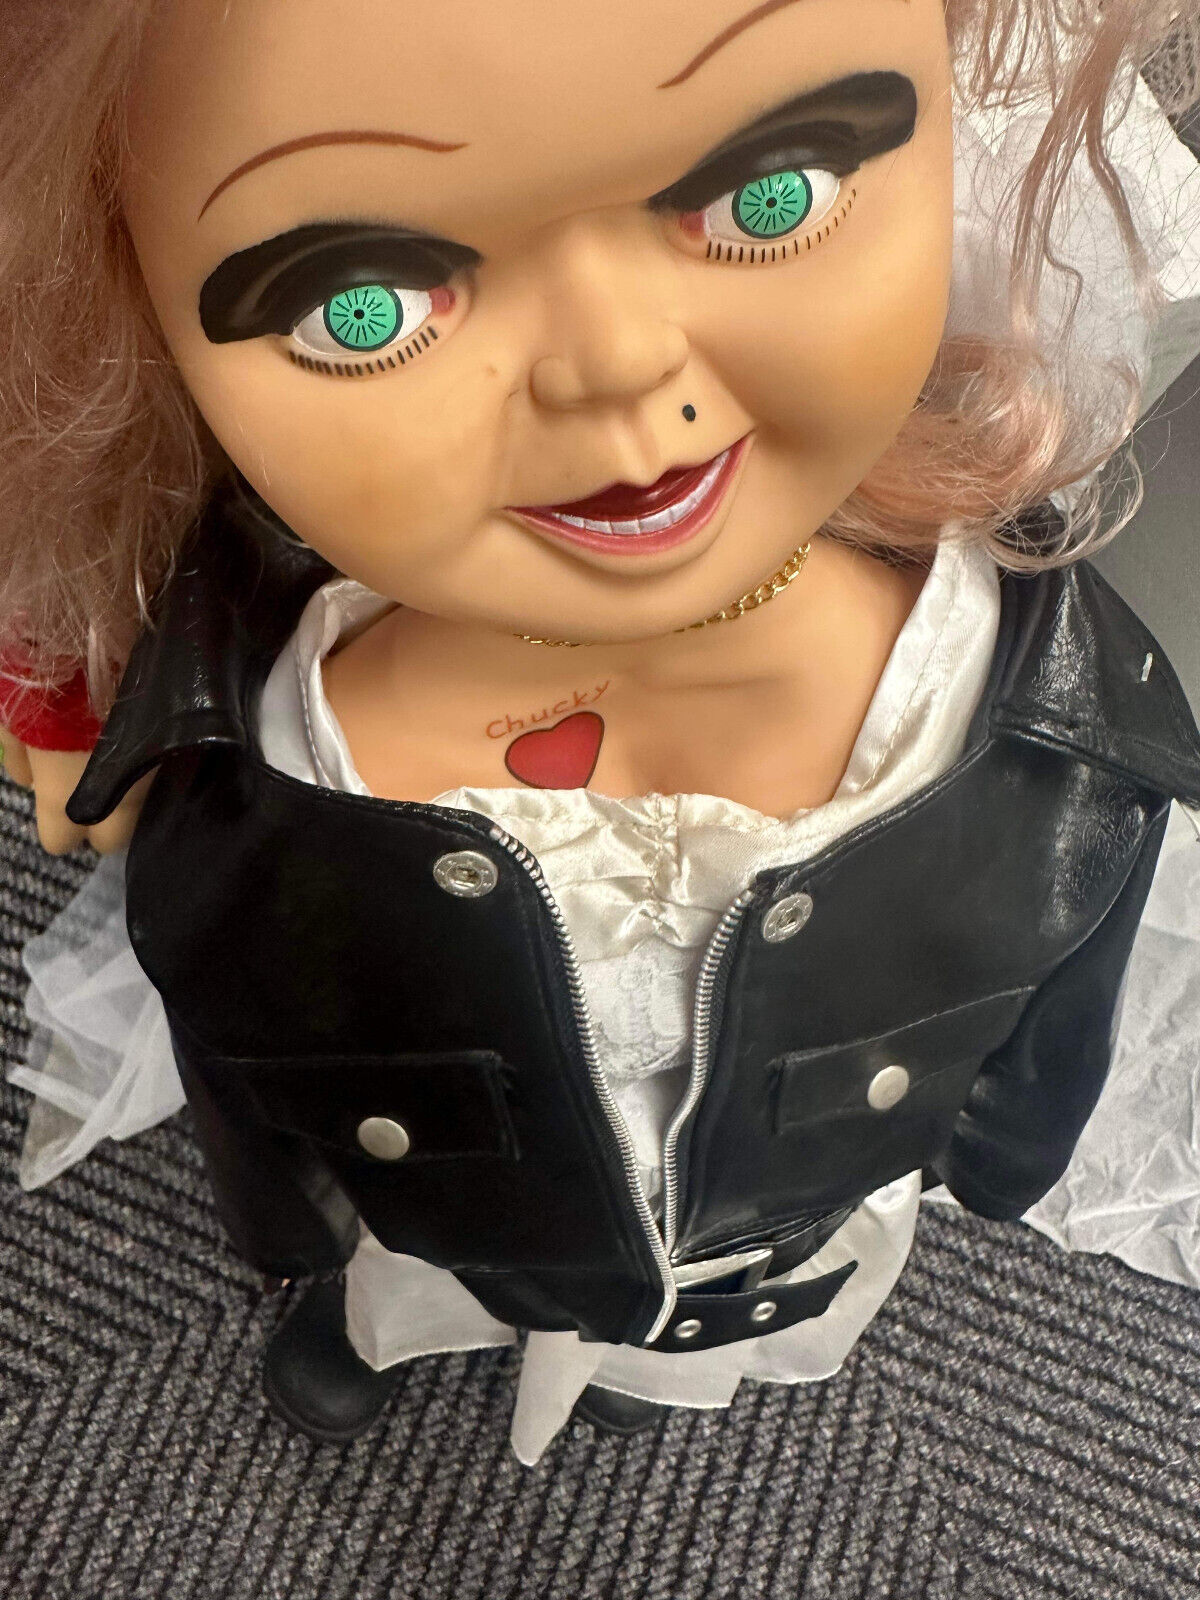 Bride of Chucky - Chucky & Tiffany 24 in. Dolls